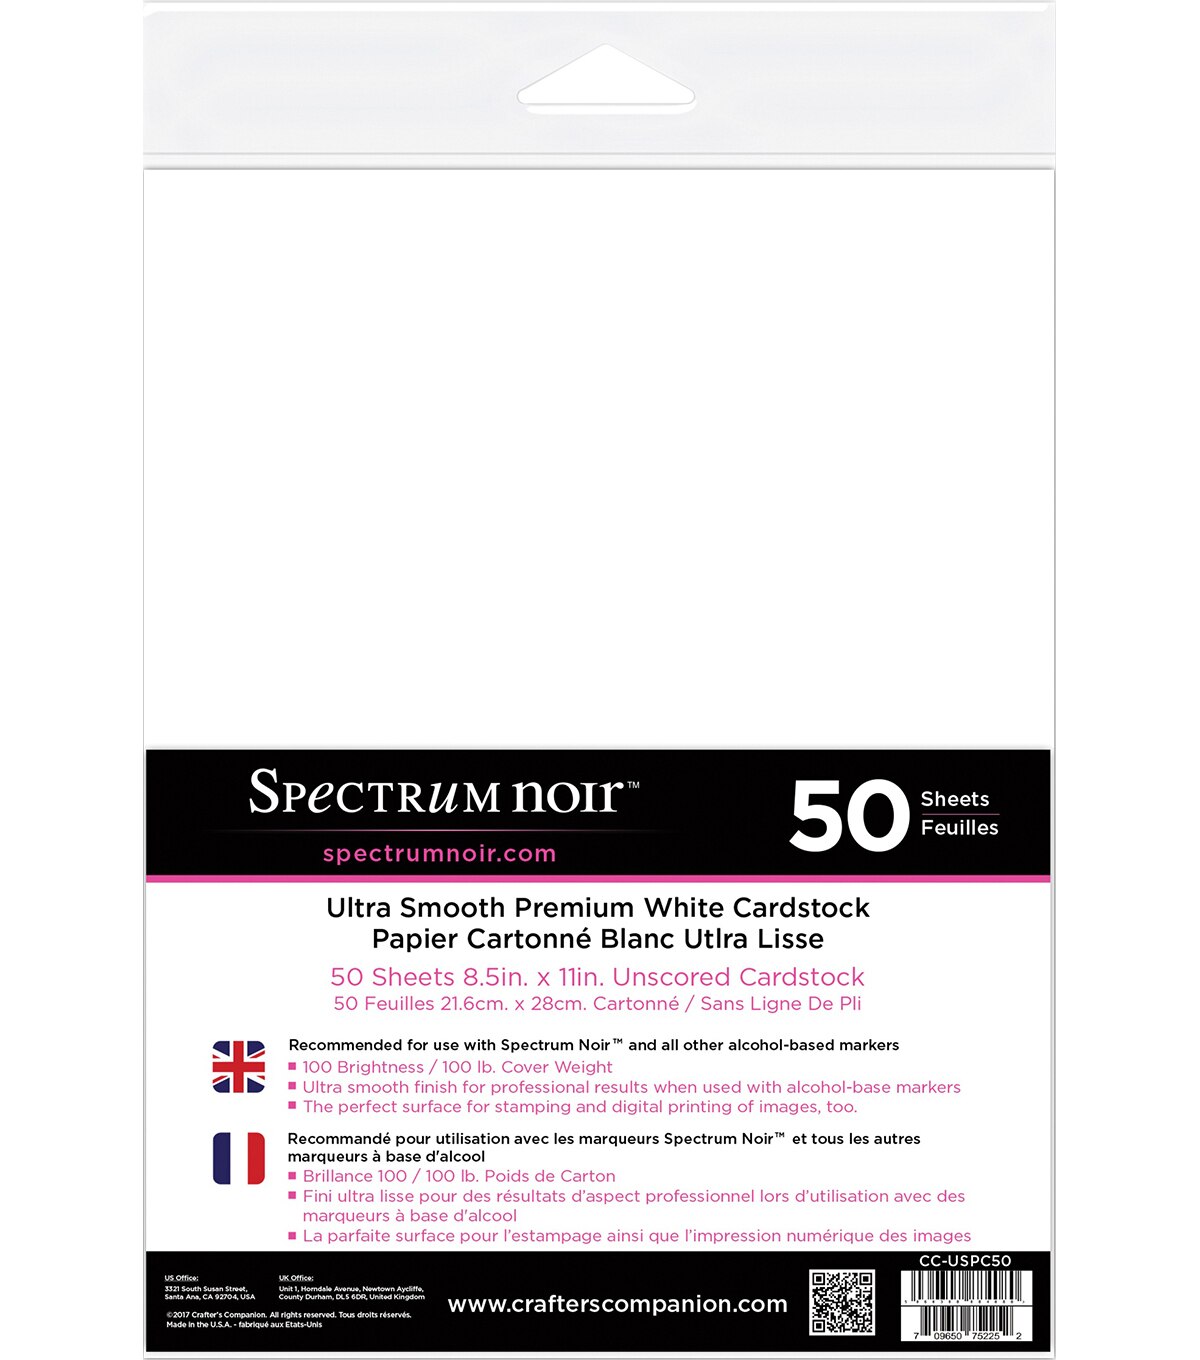 Crafters Companion Spectrum Noir Ultra Smooth Premium Cardstock 50 Pcs